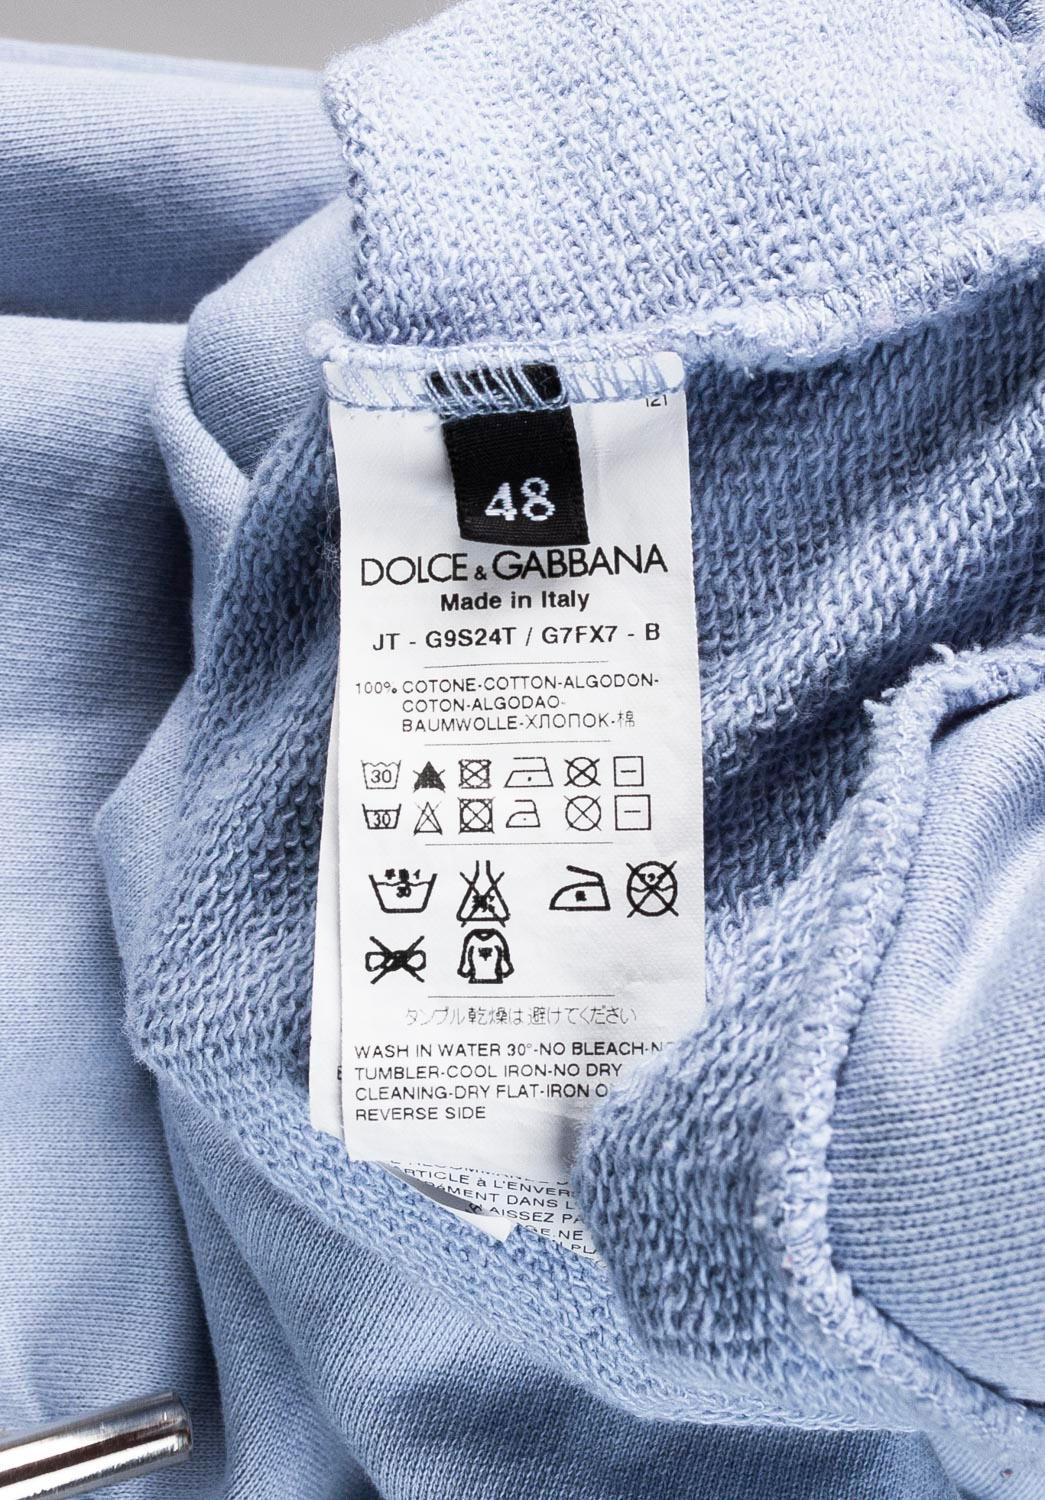 Dolce&Gabbana Marlon Brando Hoodie Sweatshirt Men Jumper Size 48IT, S541 For Sale 3